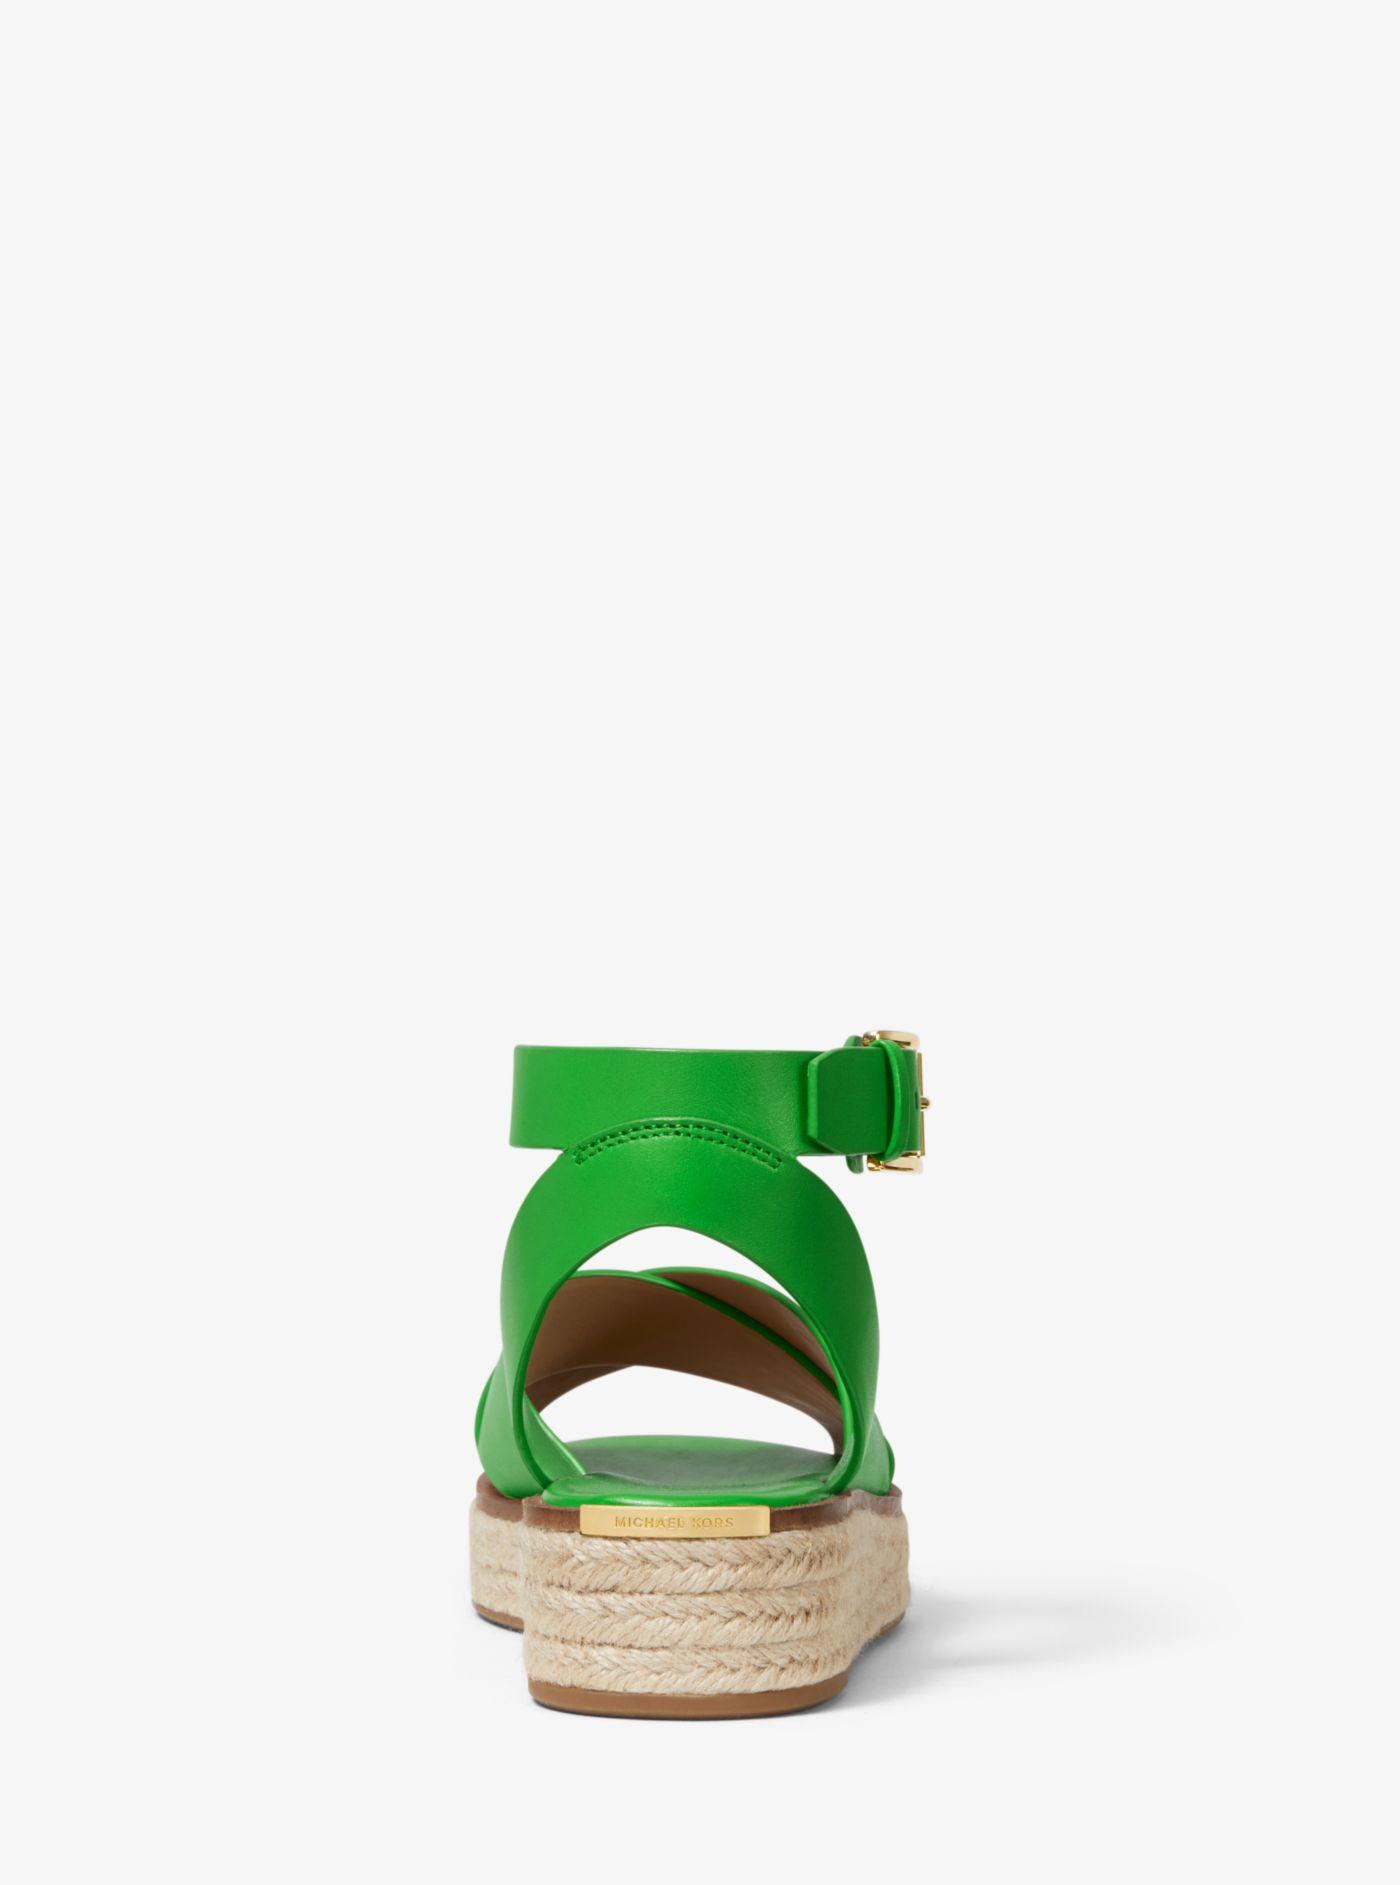 michael kors olive green sandals